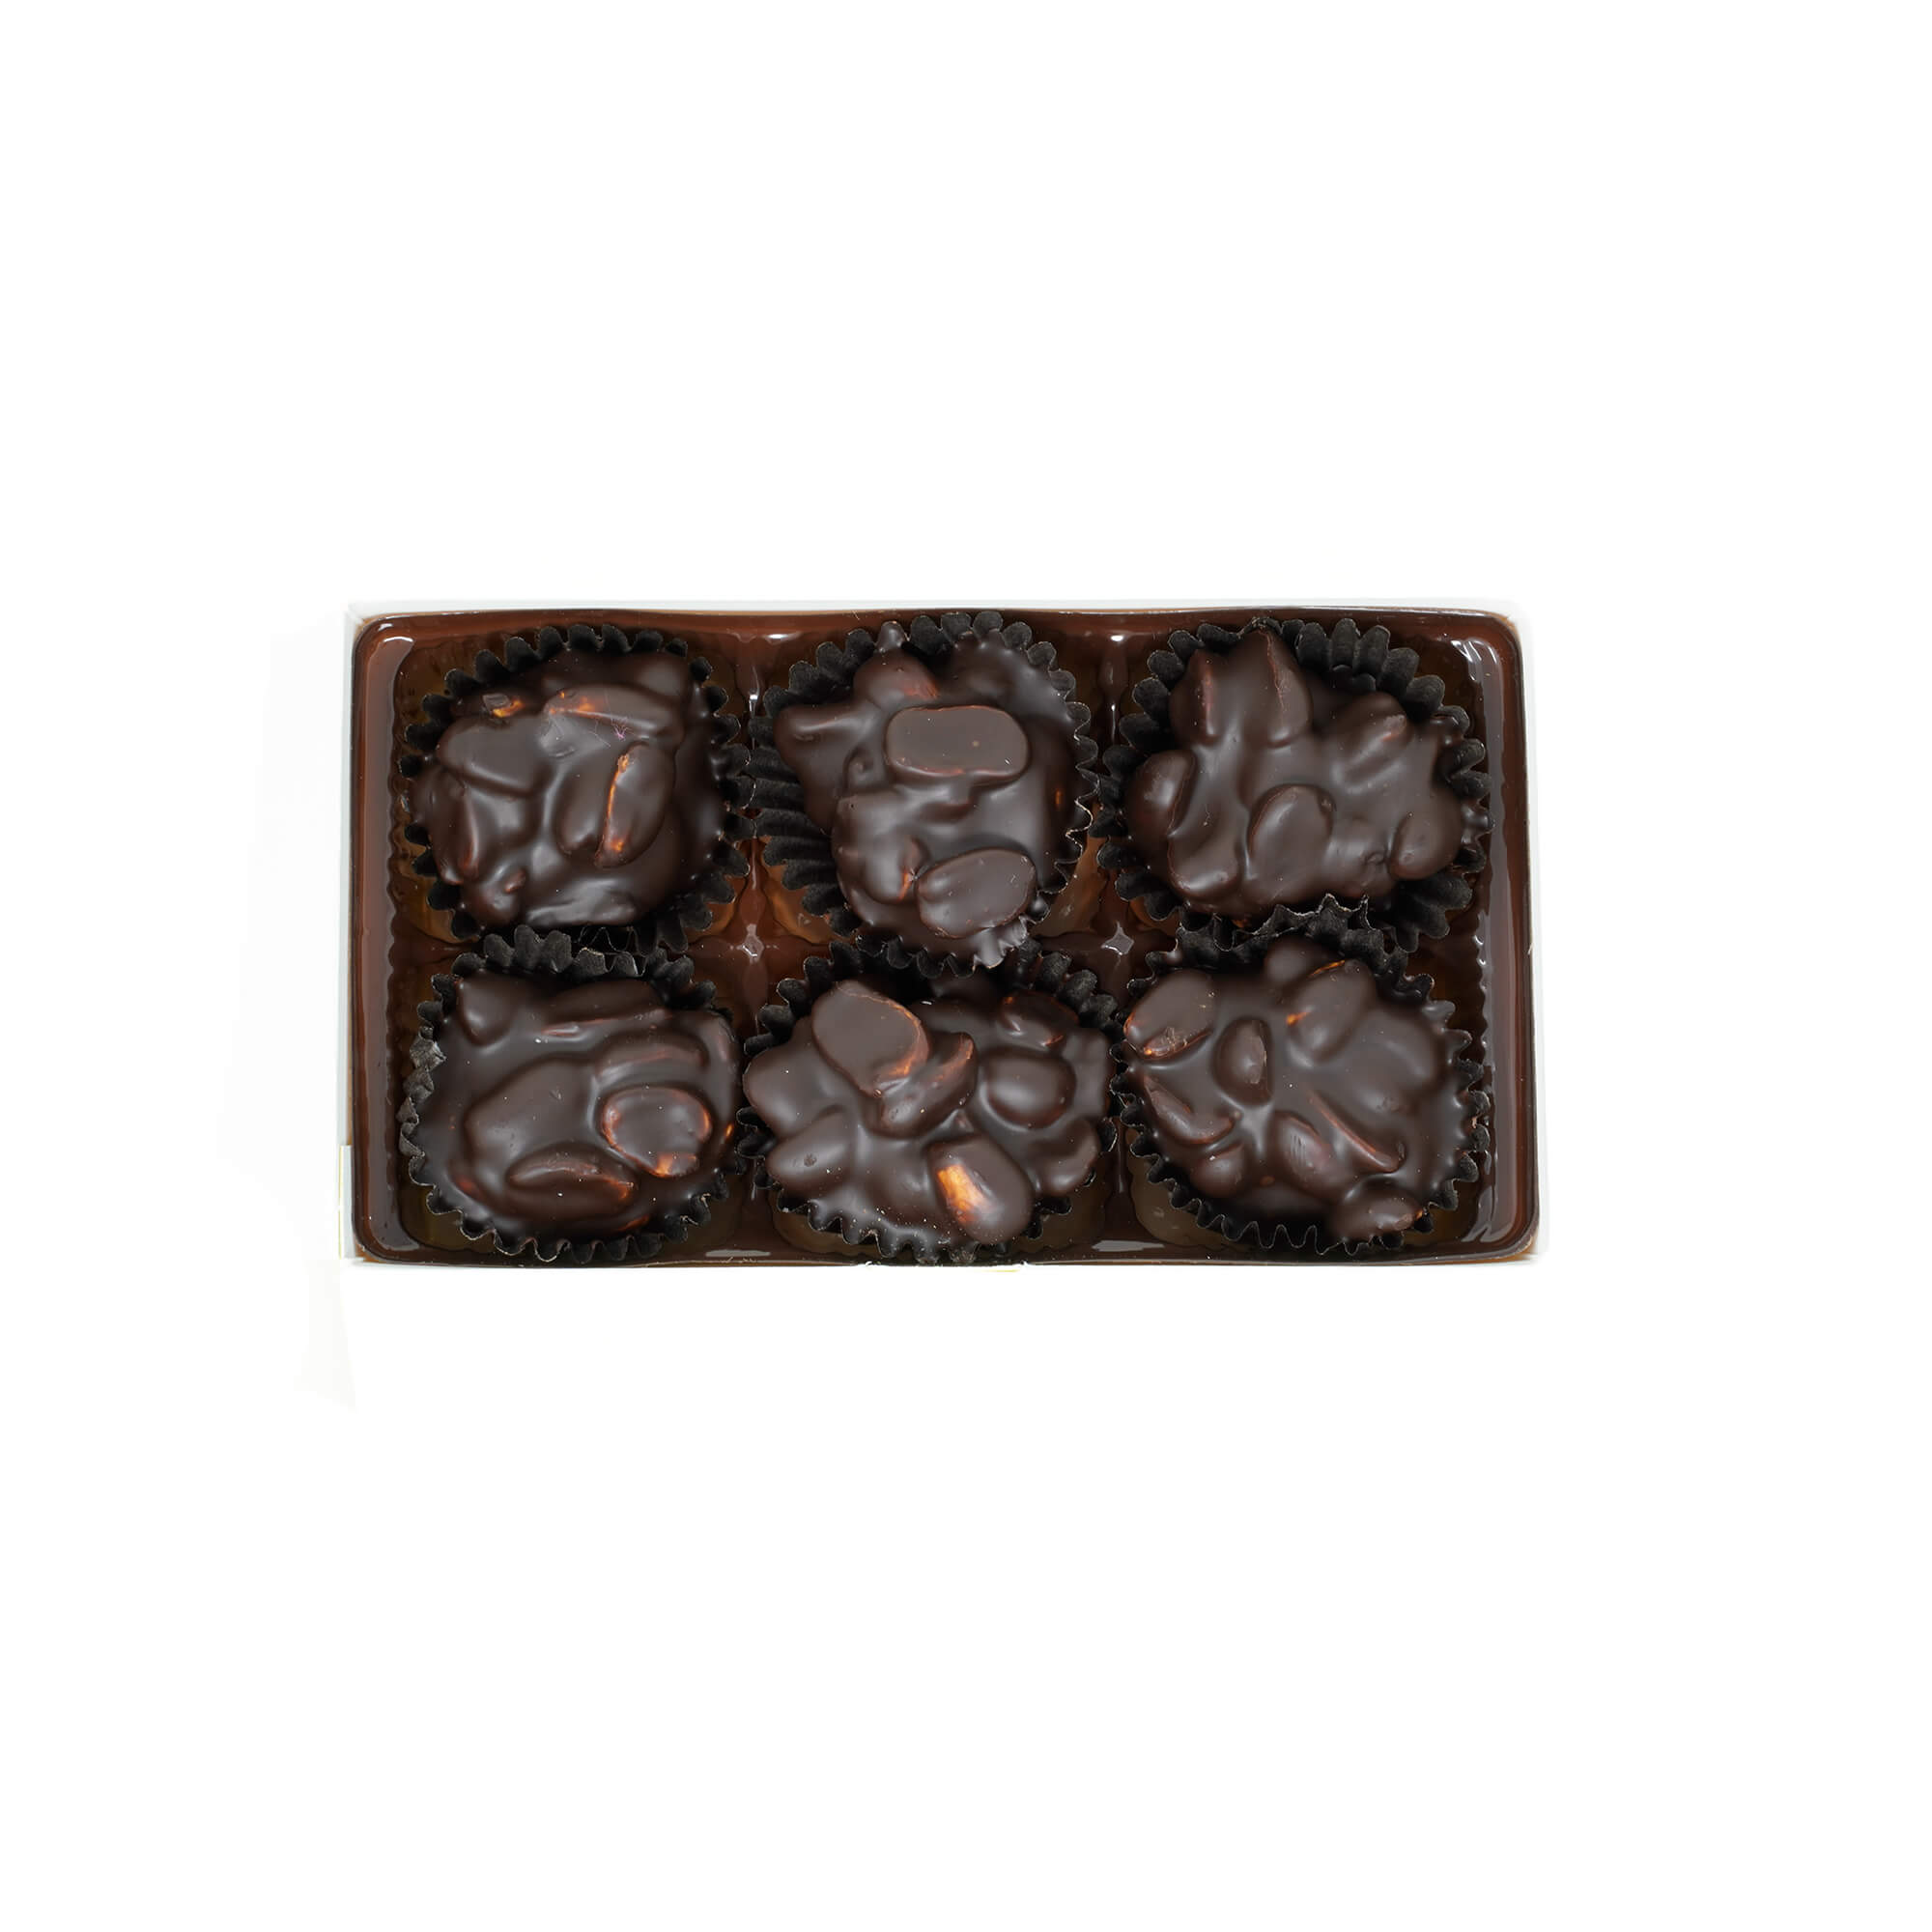 6-PCS Peanut Cluster Dark Chocolate Truffle